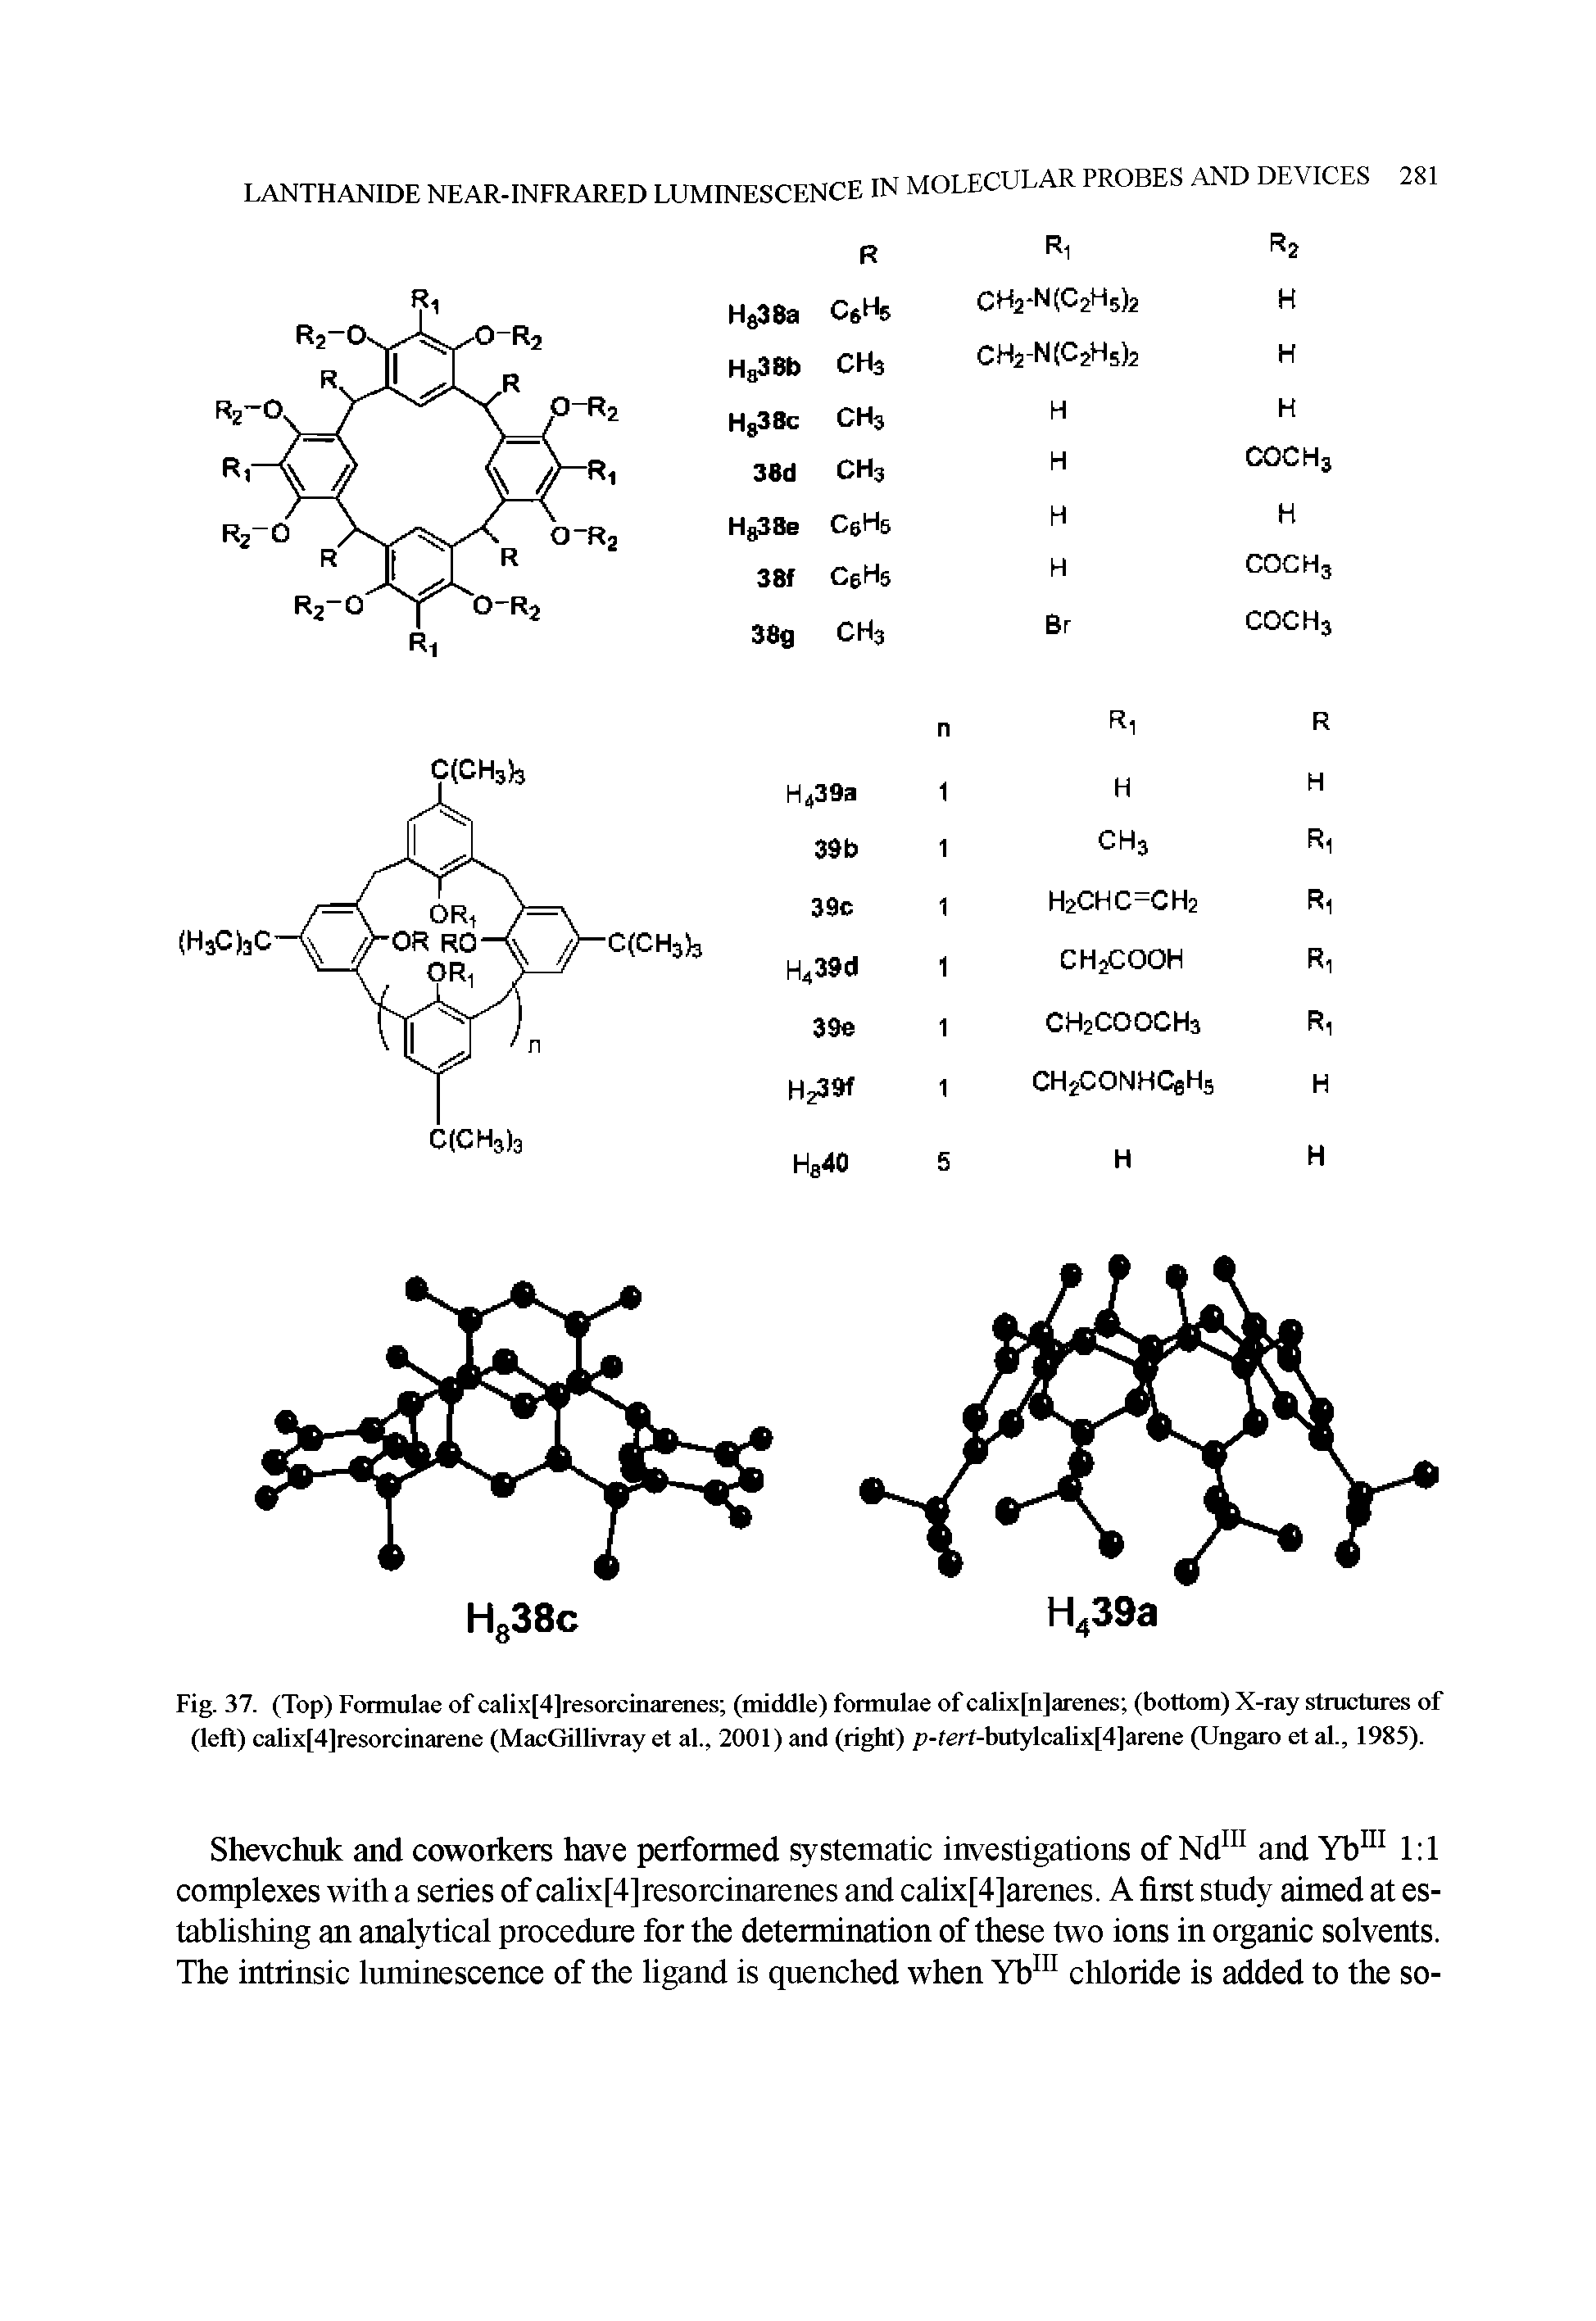 Fig. 37. (Top) Formulae of calix[4]resorcinarenes (middle) formulae of calix[n]arenes (bottom) X-ray structures of (left) calix[4]resorcinarene (MacGillivray et al., 2001) and (right) p-tert-butylcalix[4]arene (Ungaro et al., 1985).